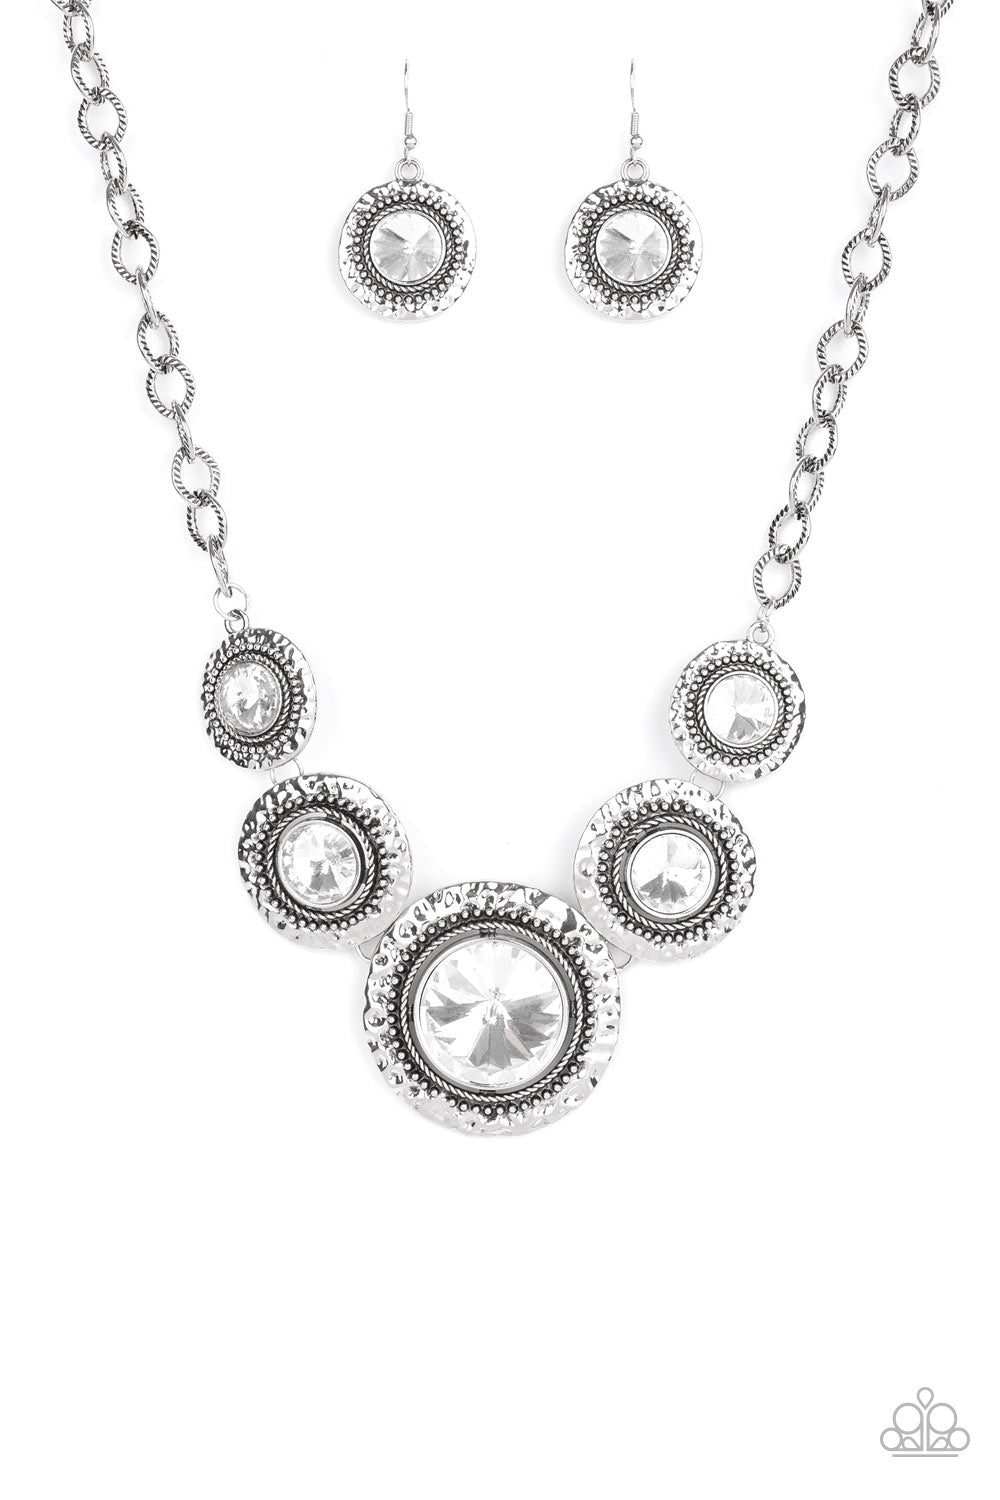 Paparazzi Global Glamour White Necklace. Get Free Shipping. #P2ST-WTXX-027XX